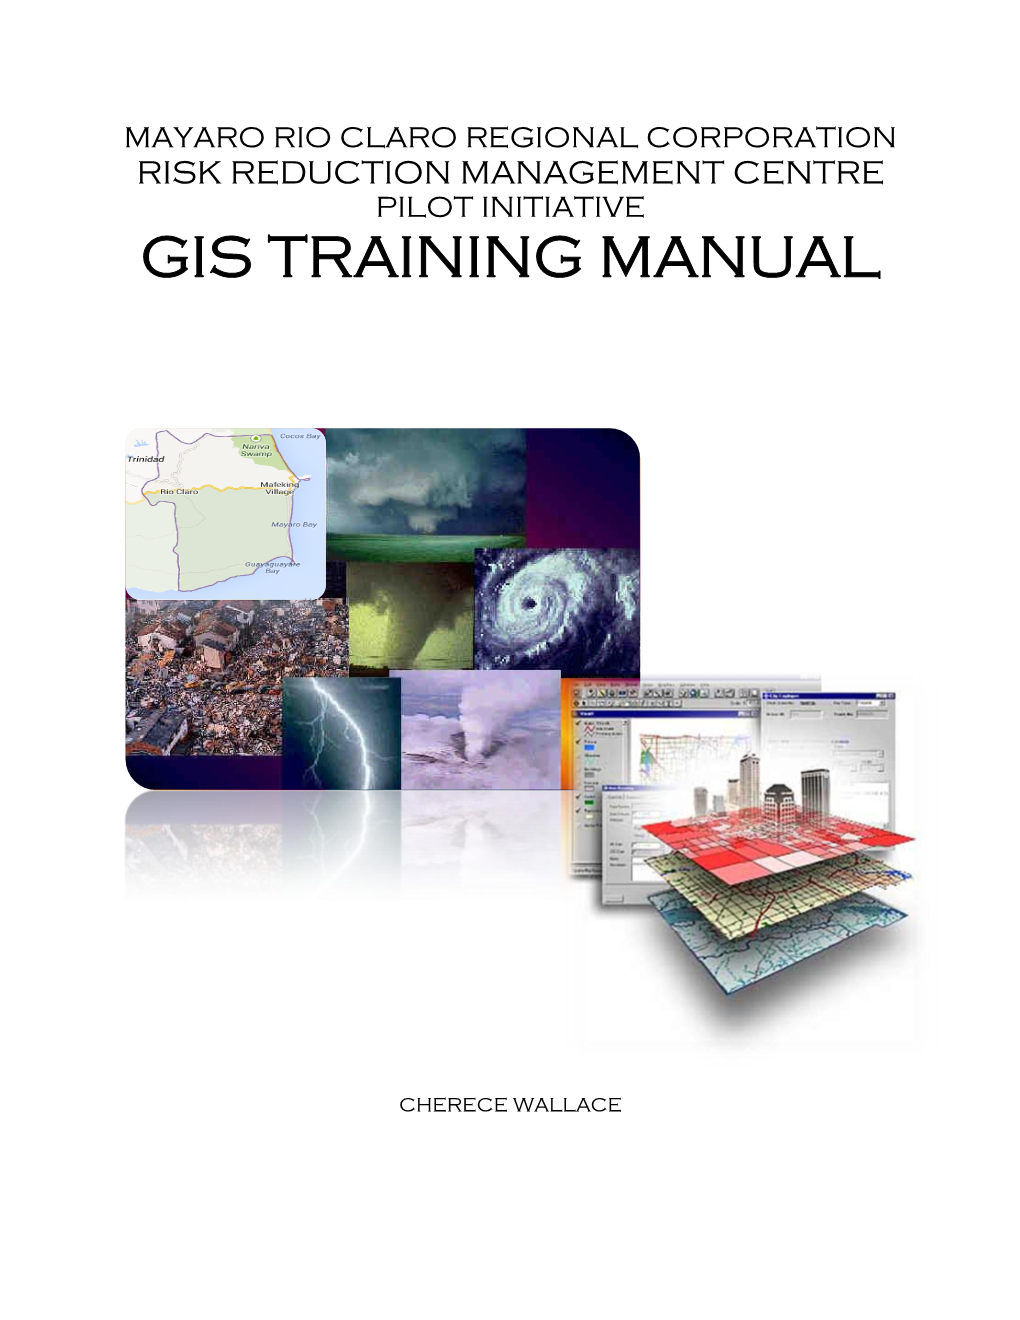 RRMC GIS Training Manual